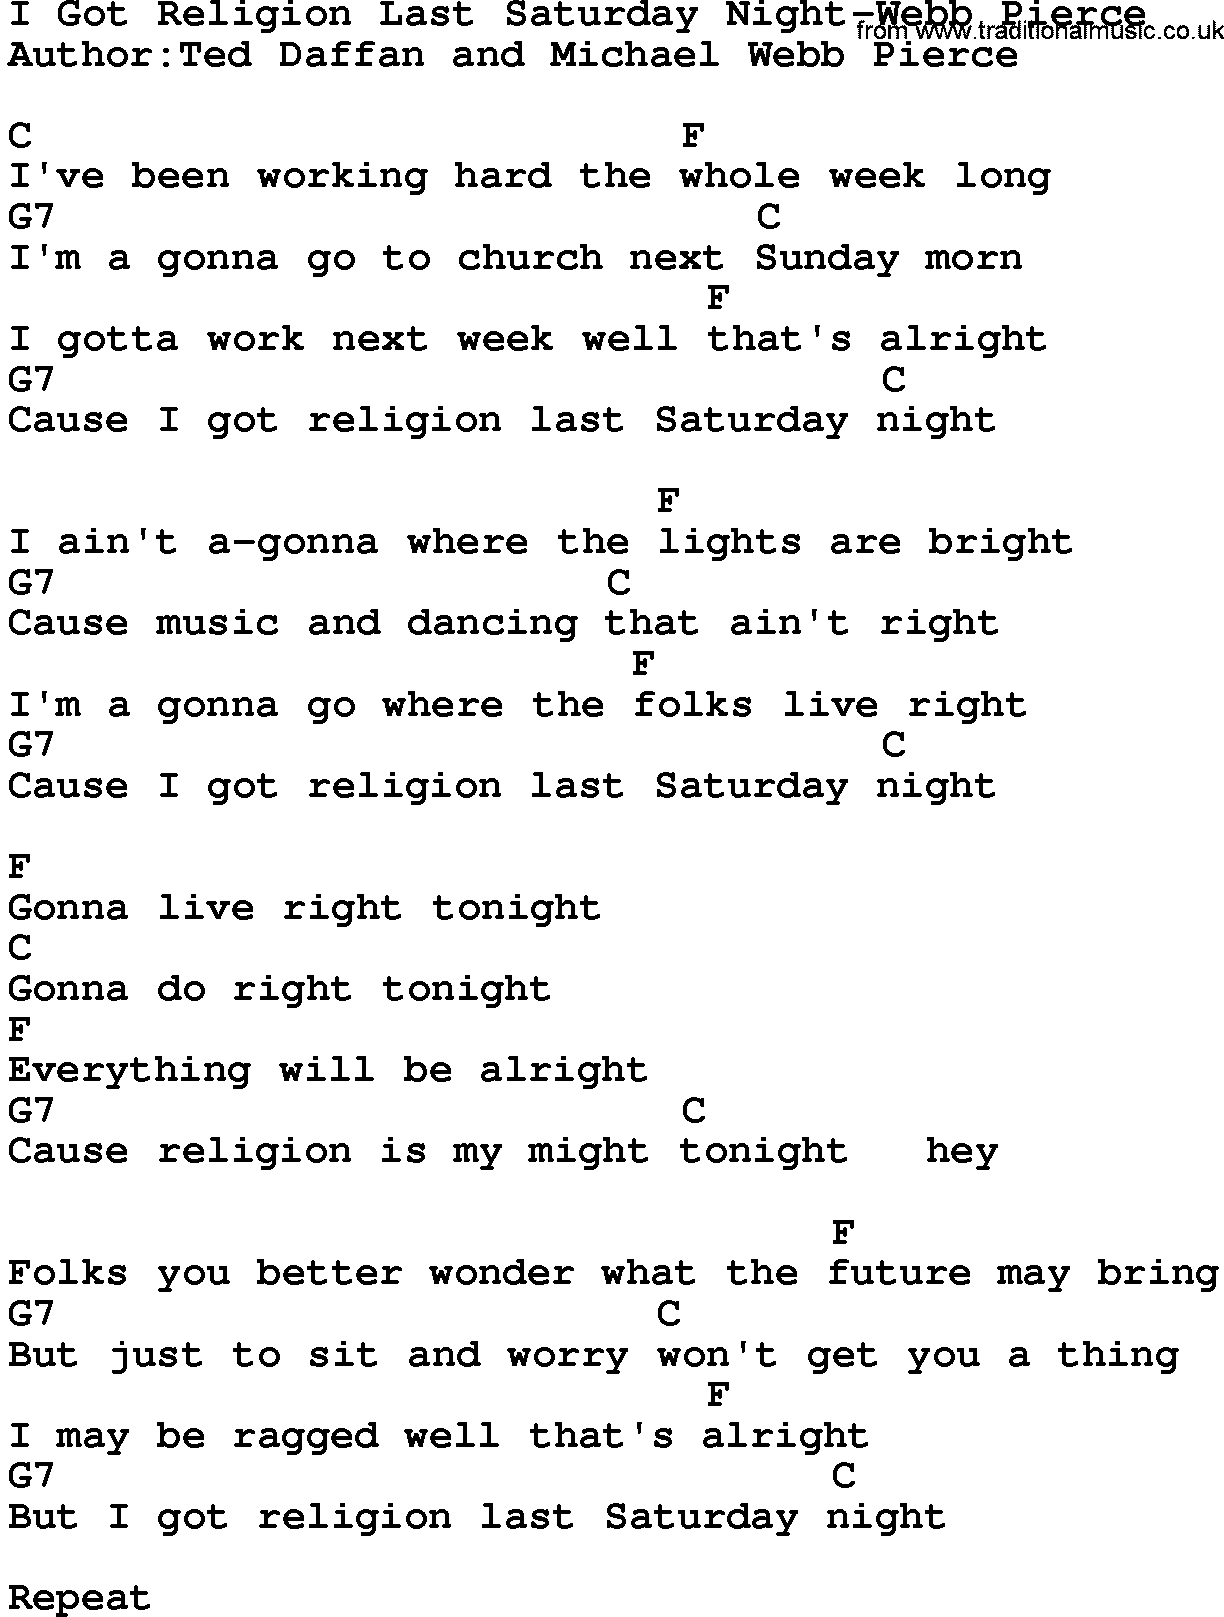 Country music song: I Got Religion Last Saturday Night-Webb Pierce lyrics and chords